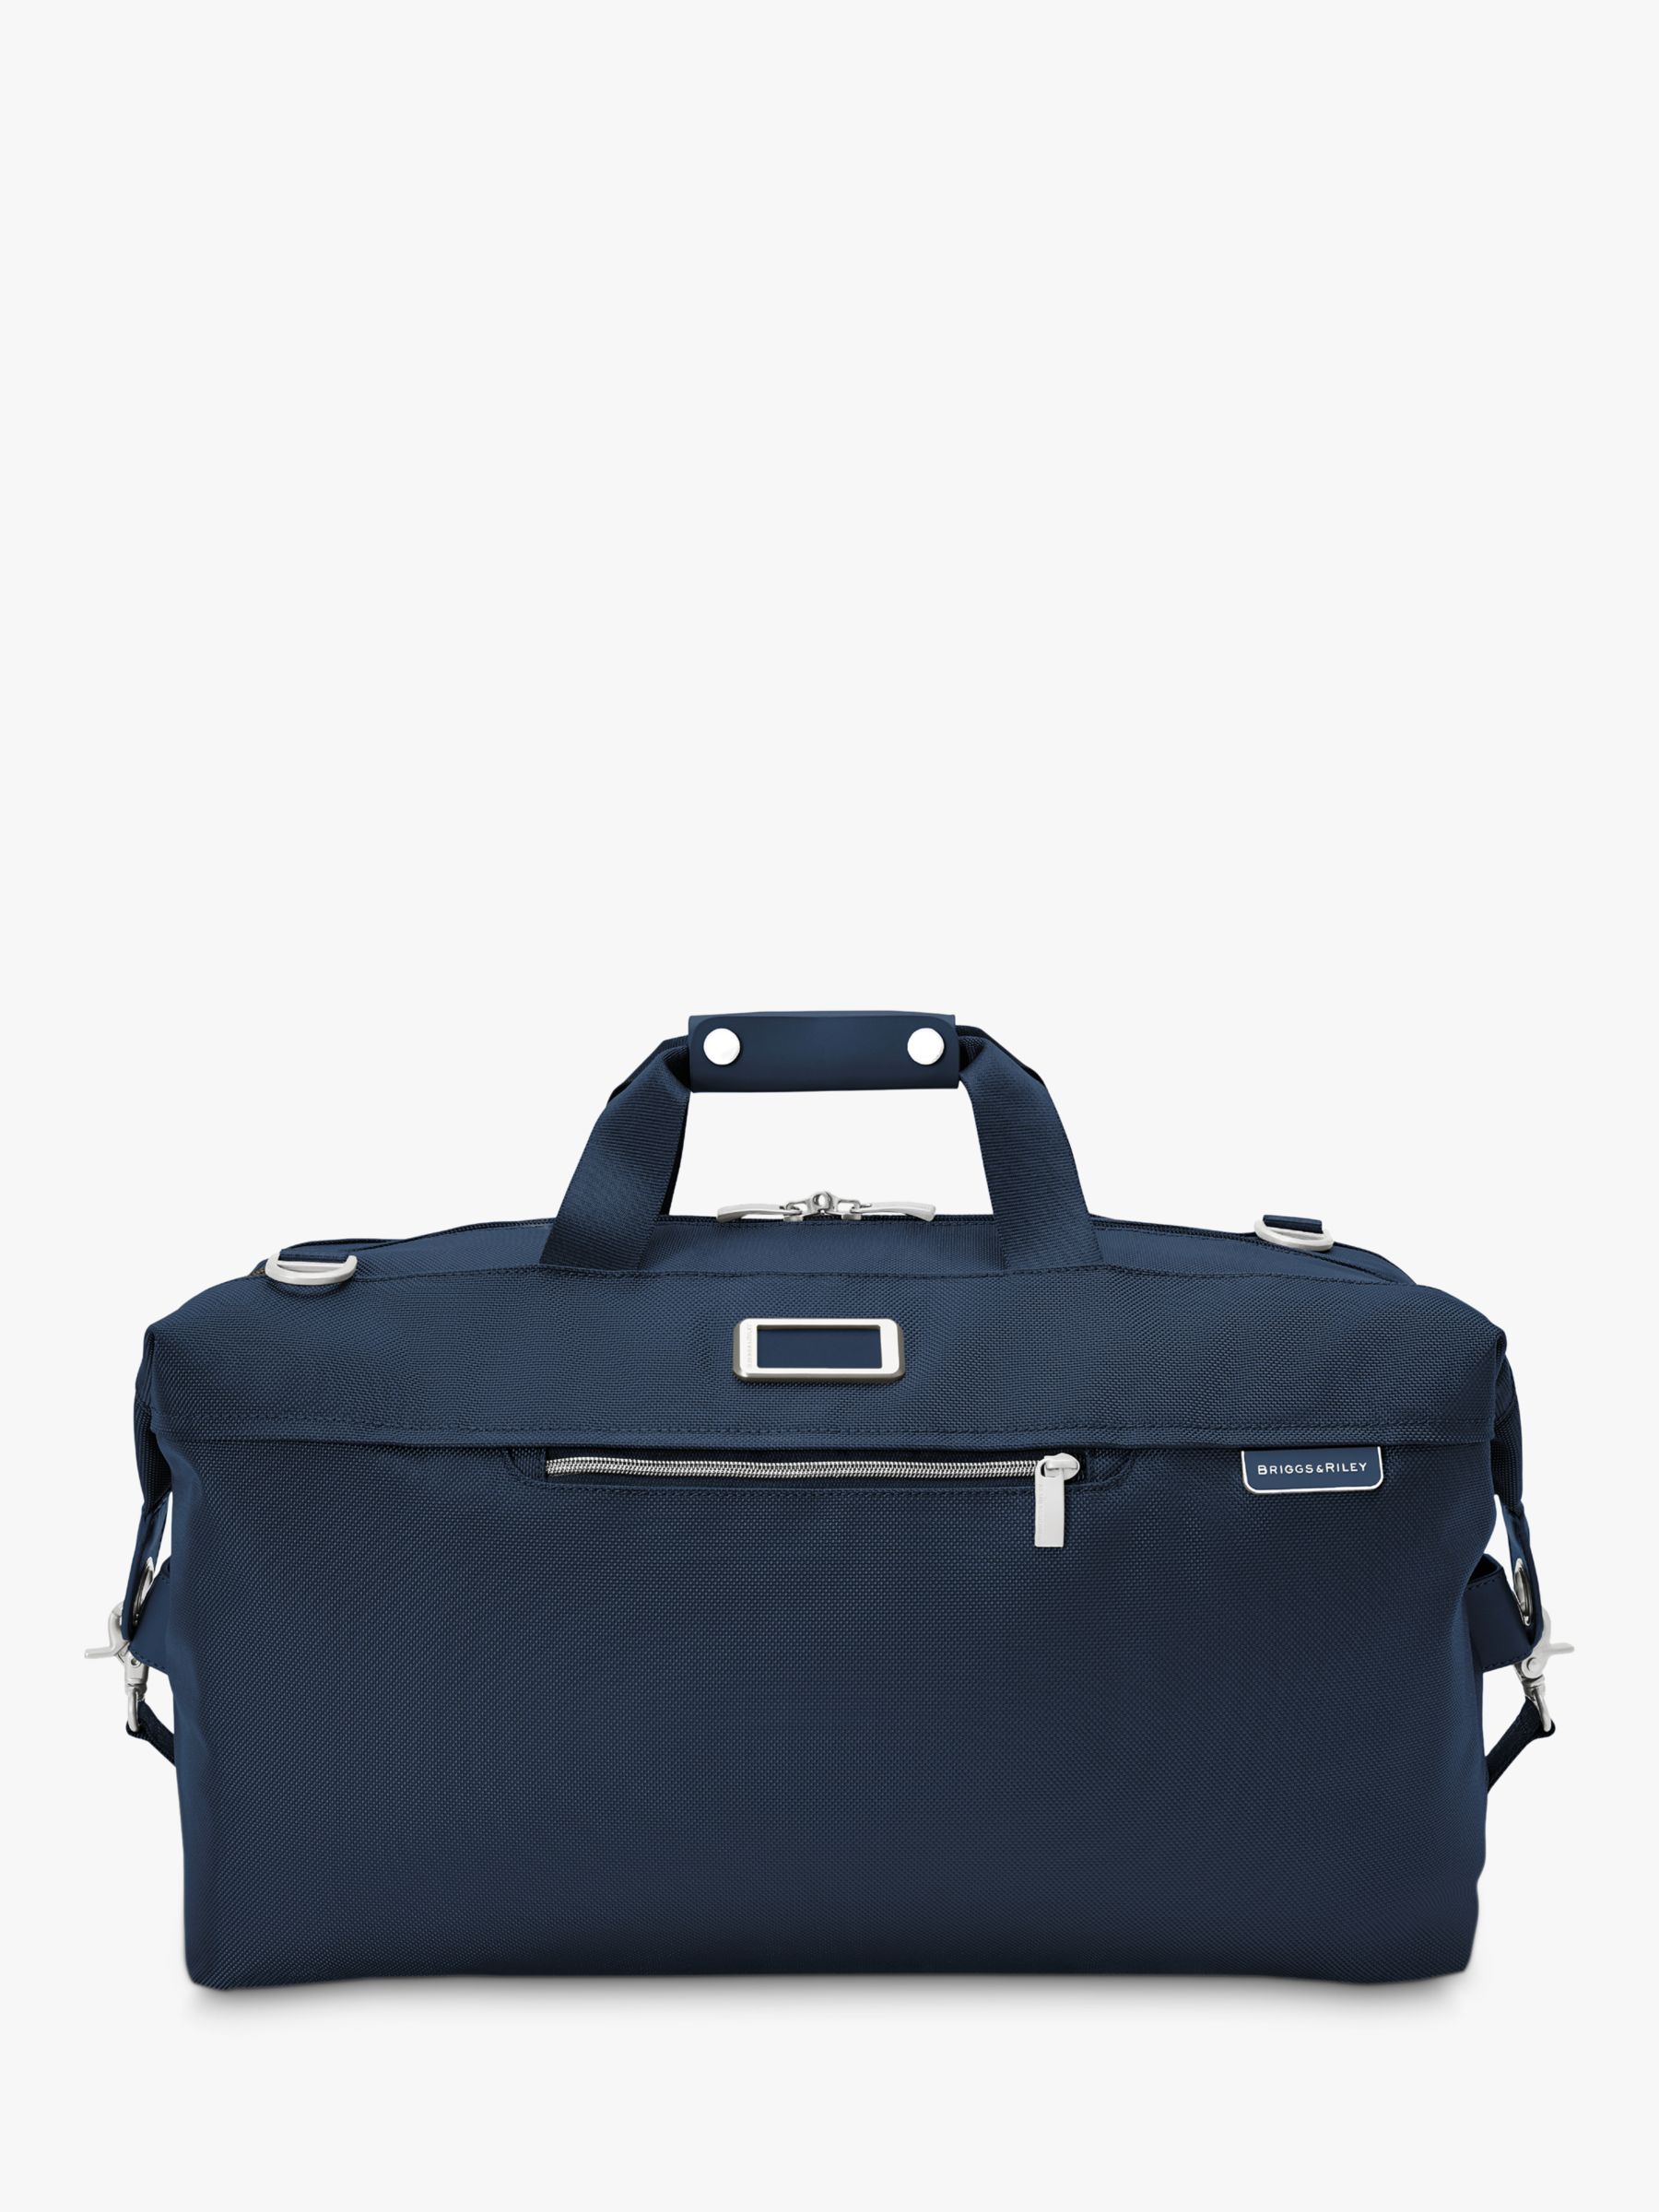 Спортивная сумка Baseline Weekender Briggs & Riley, темно-синий большая дорожная дорожная сумка zdx briggs